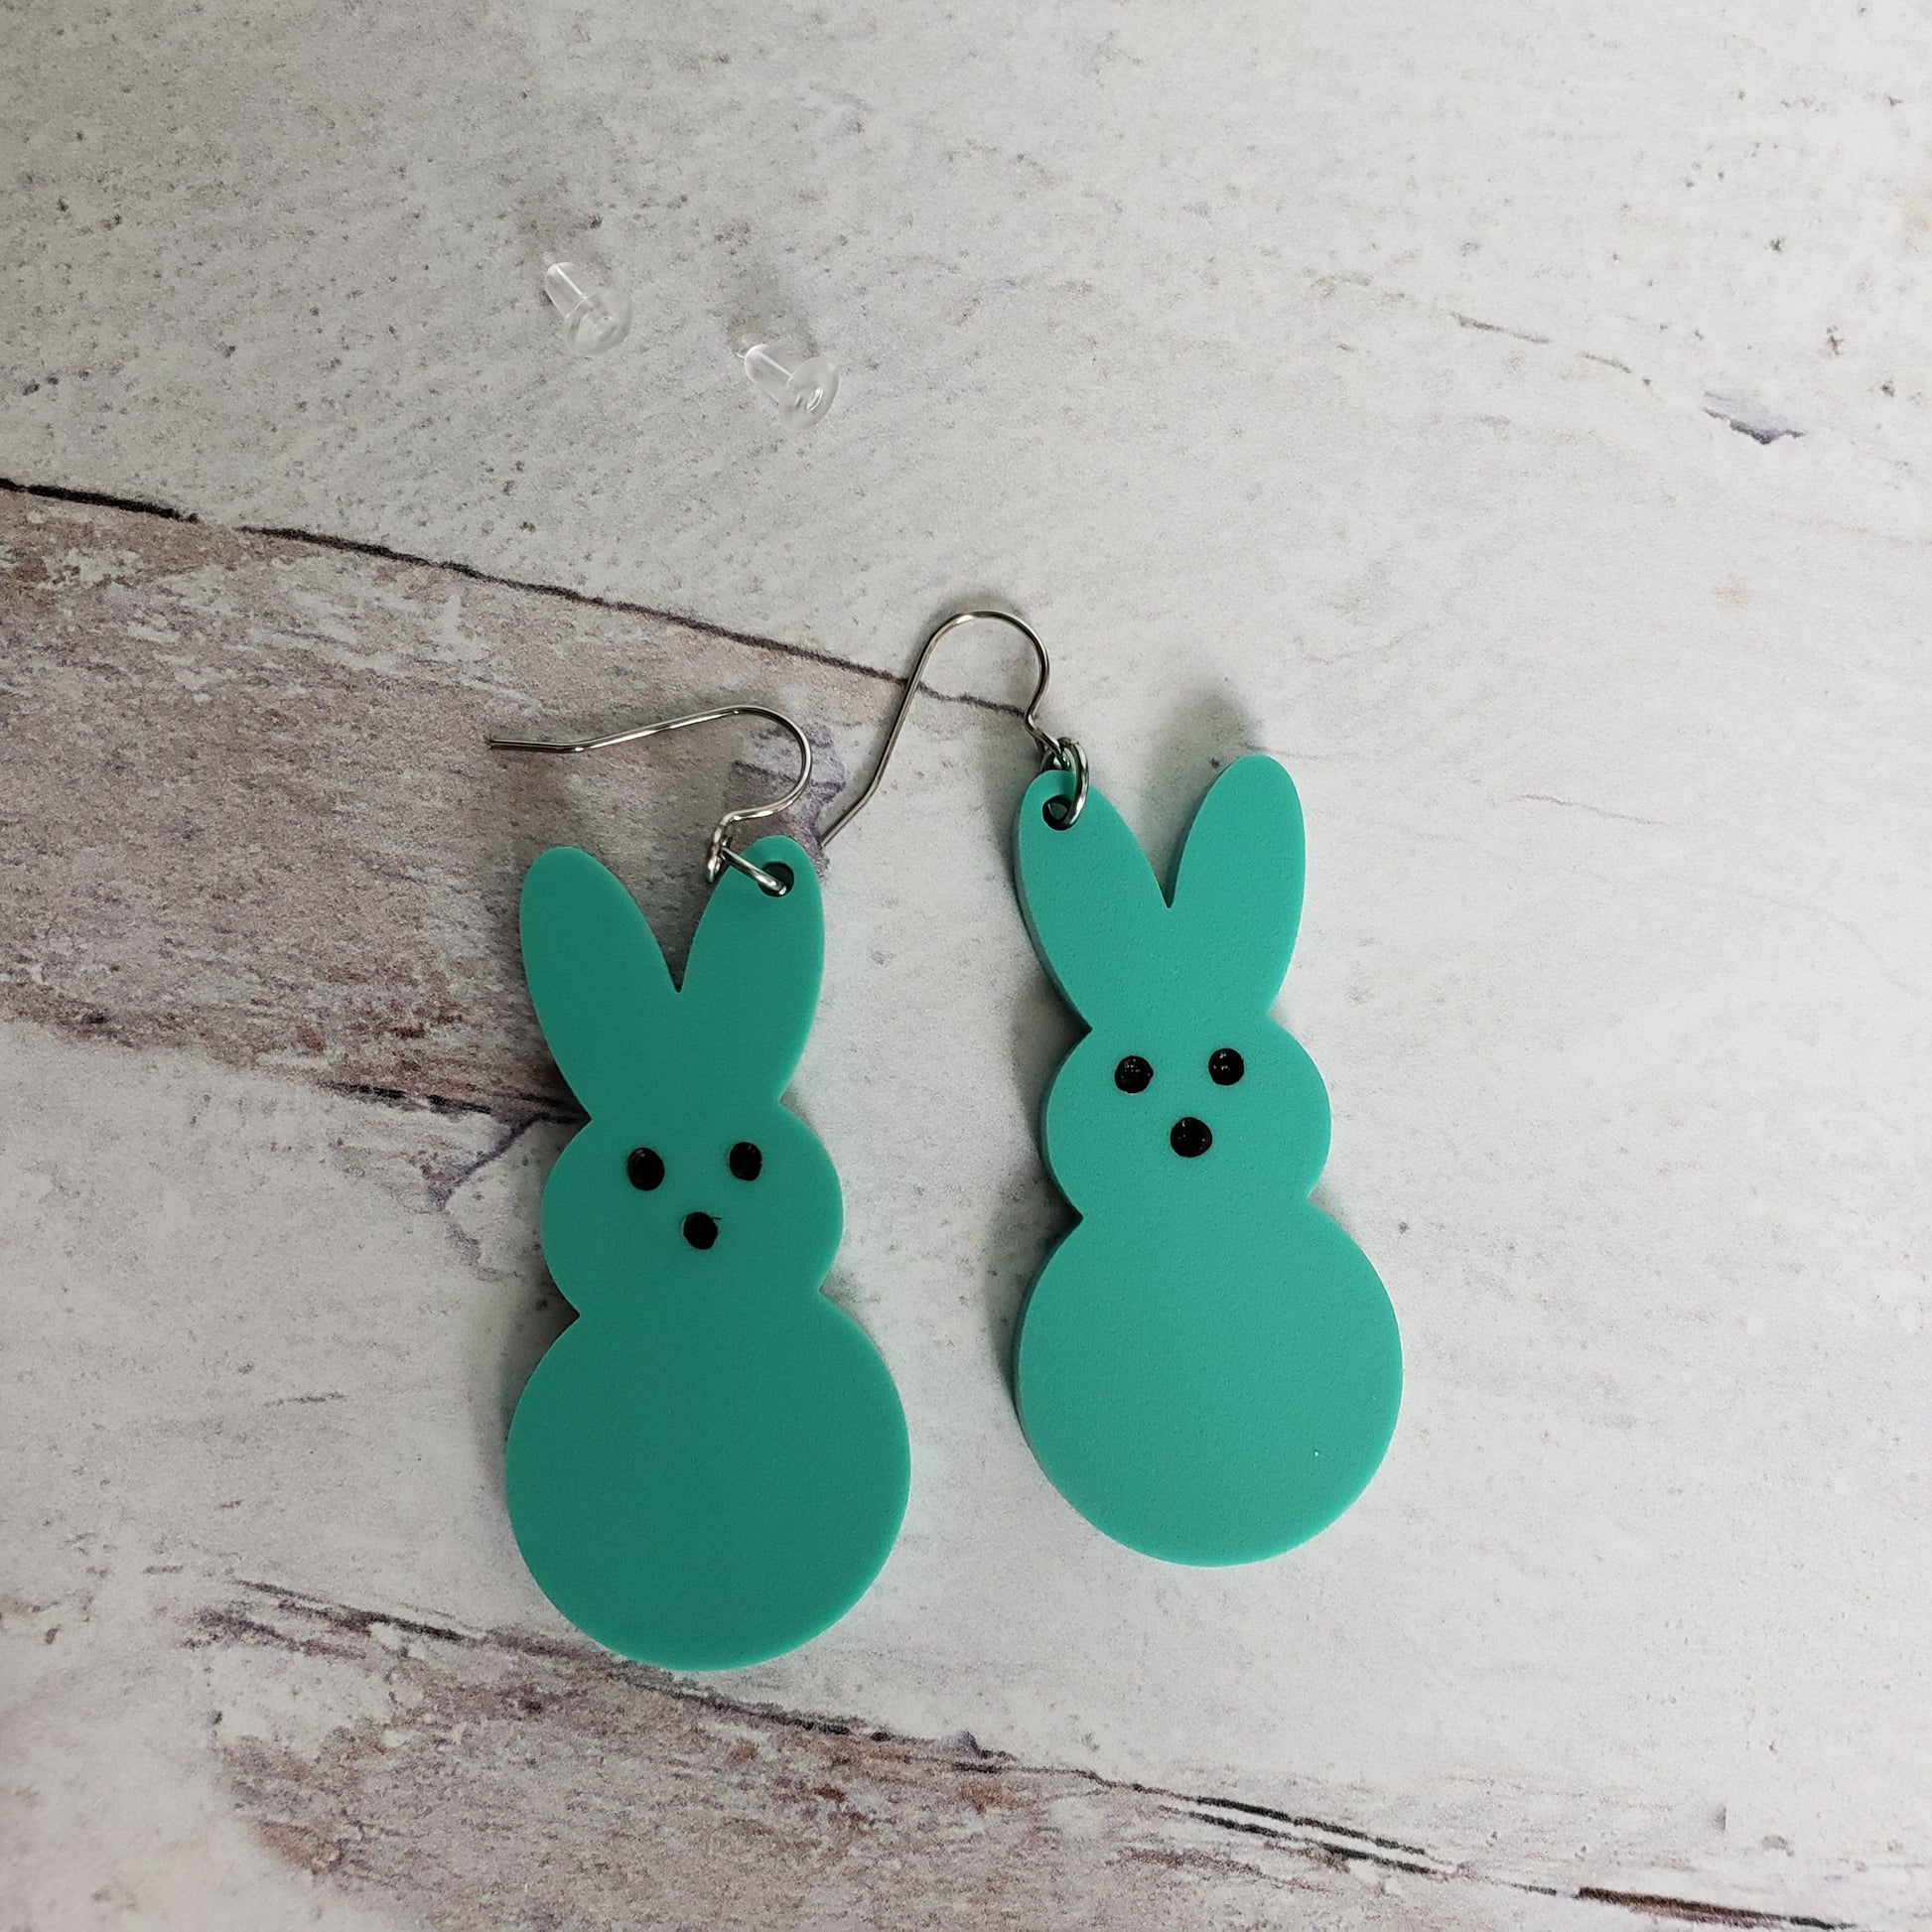 Matte Mint Green Marshmallow Bunny Earrings on stainless earring wires.